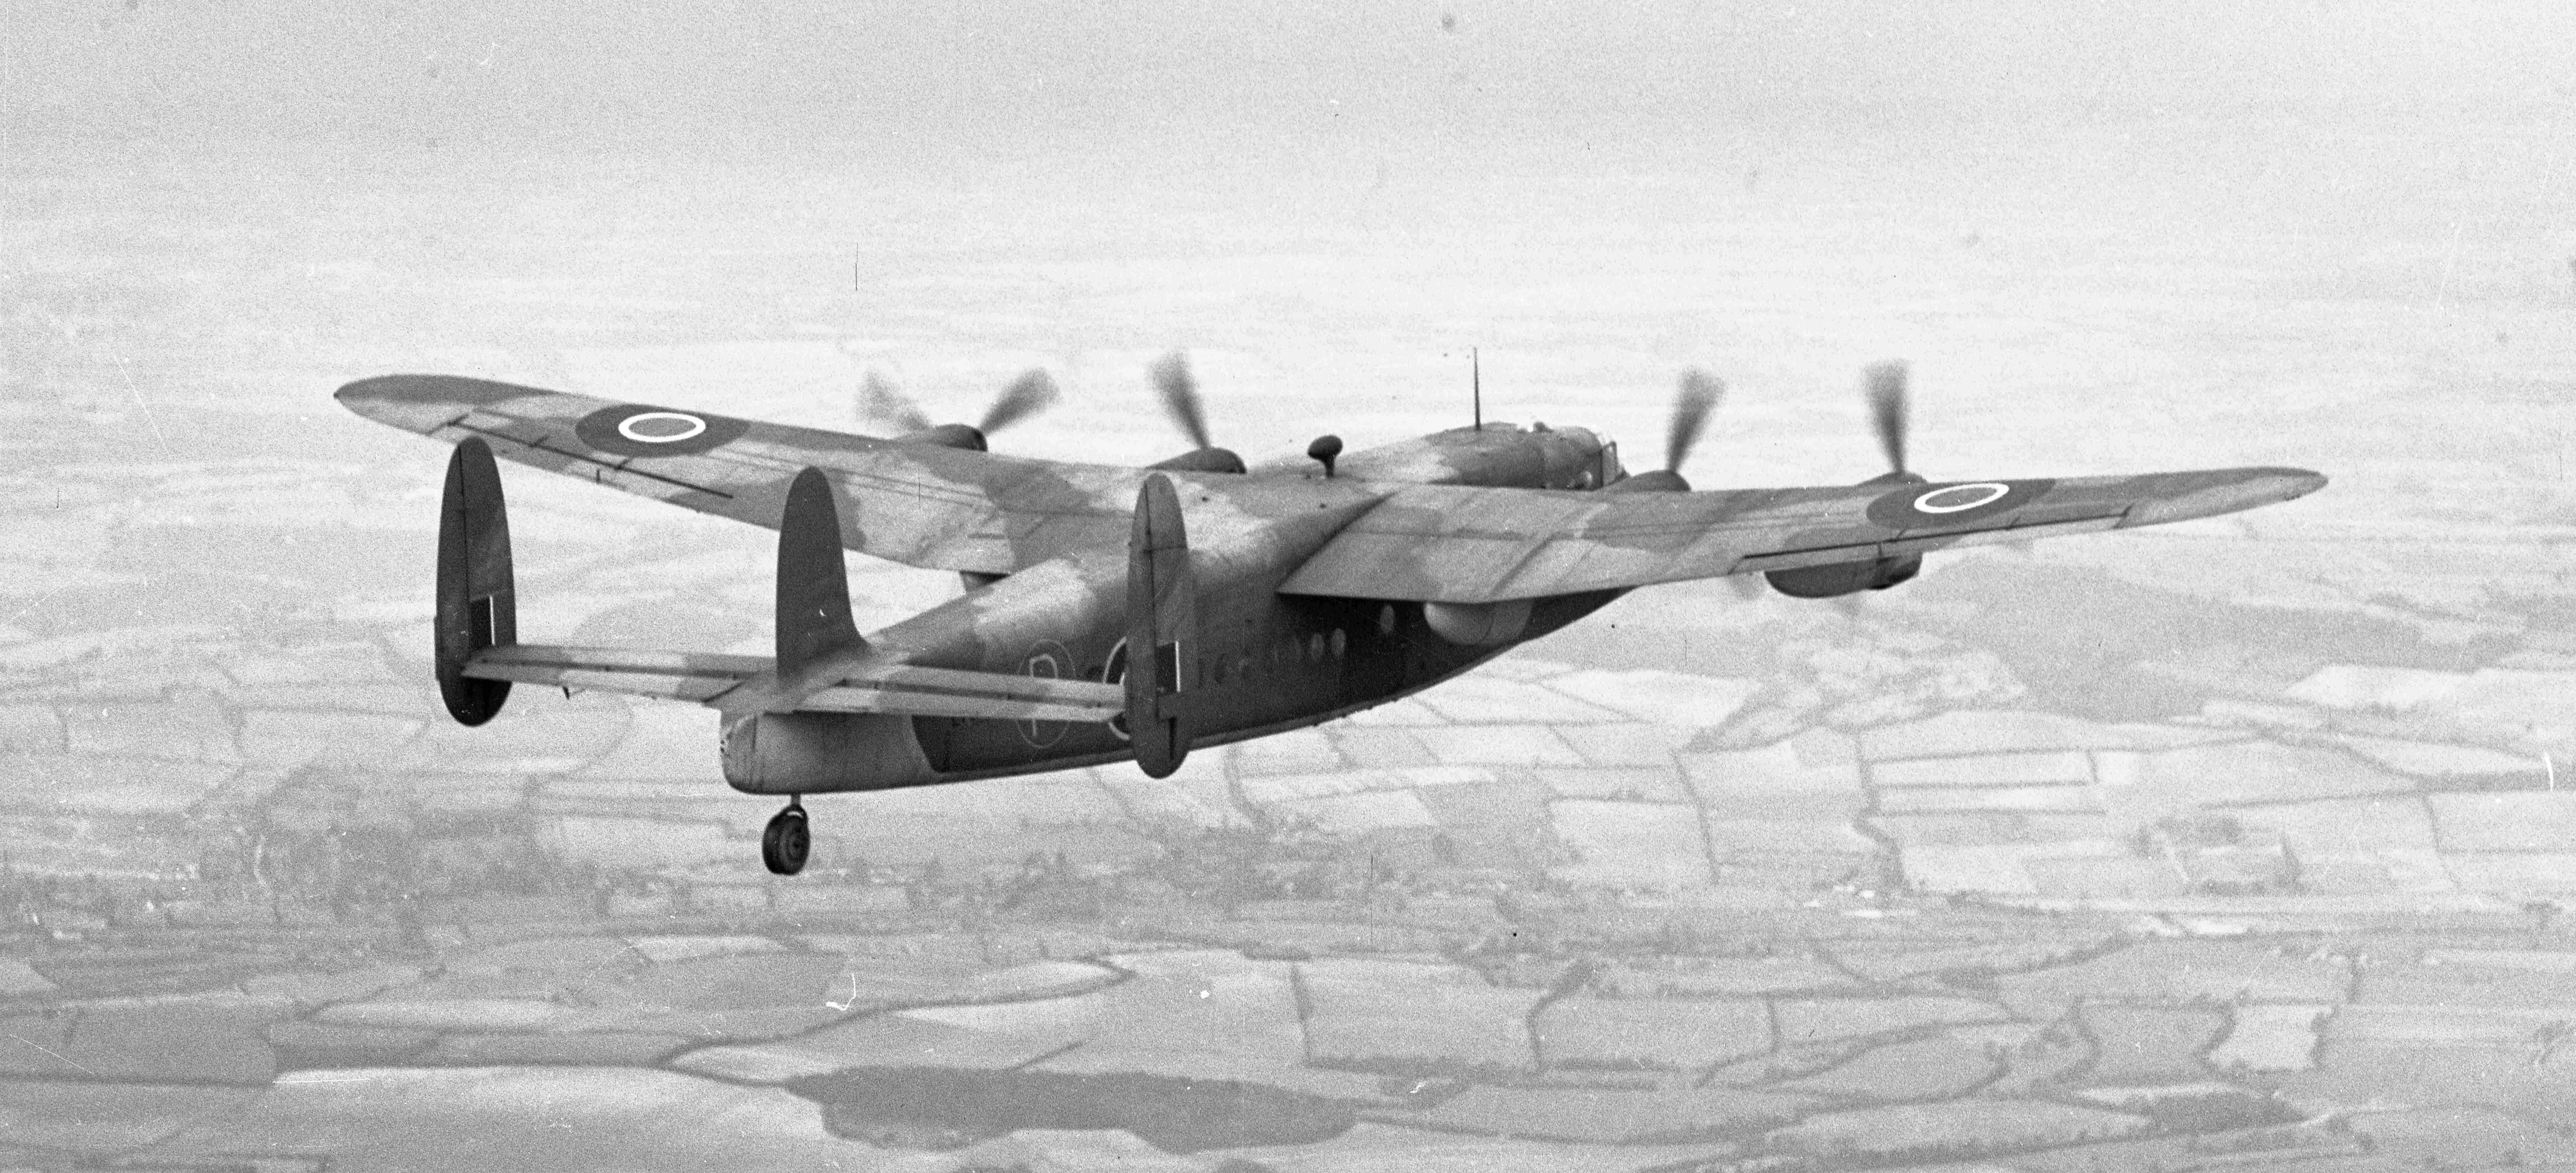 Avro York transport aircraft in flight, date unknown